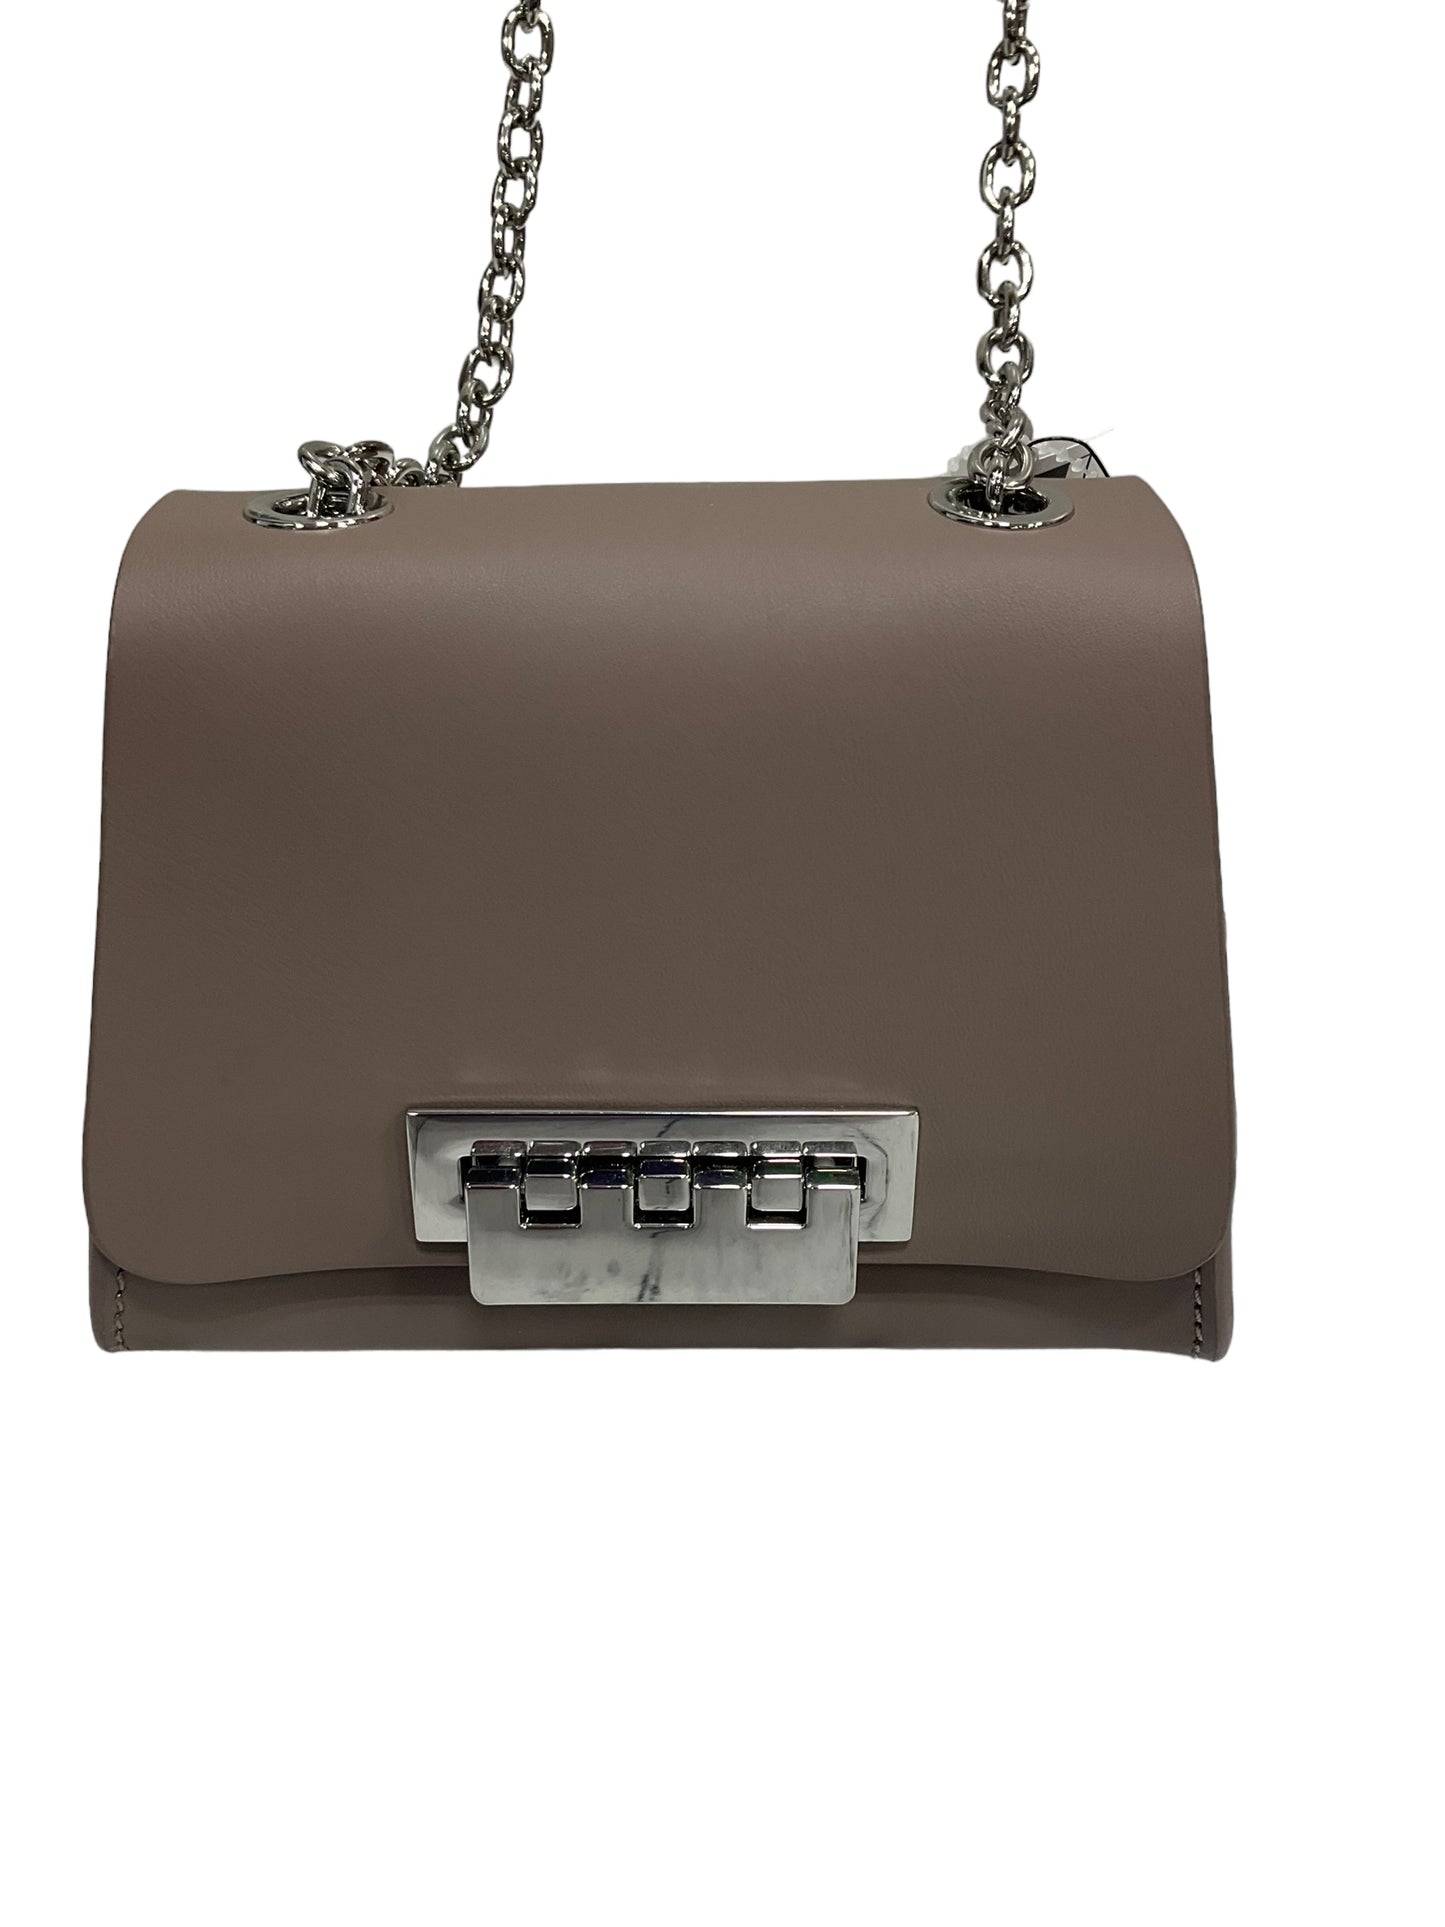 Handbag By Zac Posen  Size: Small